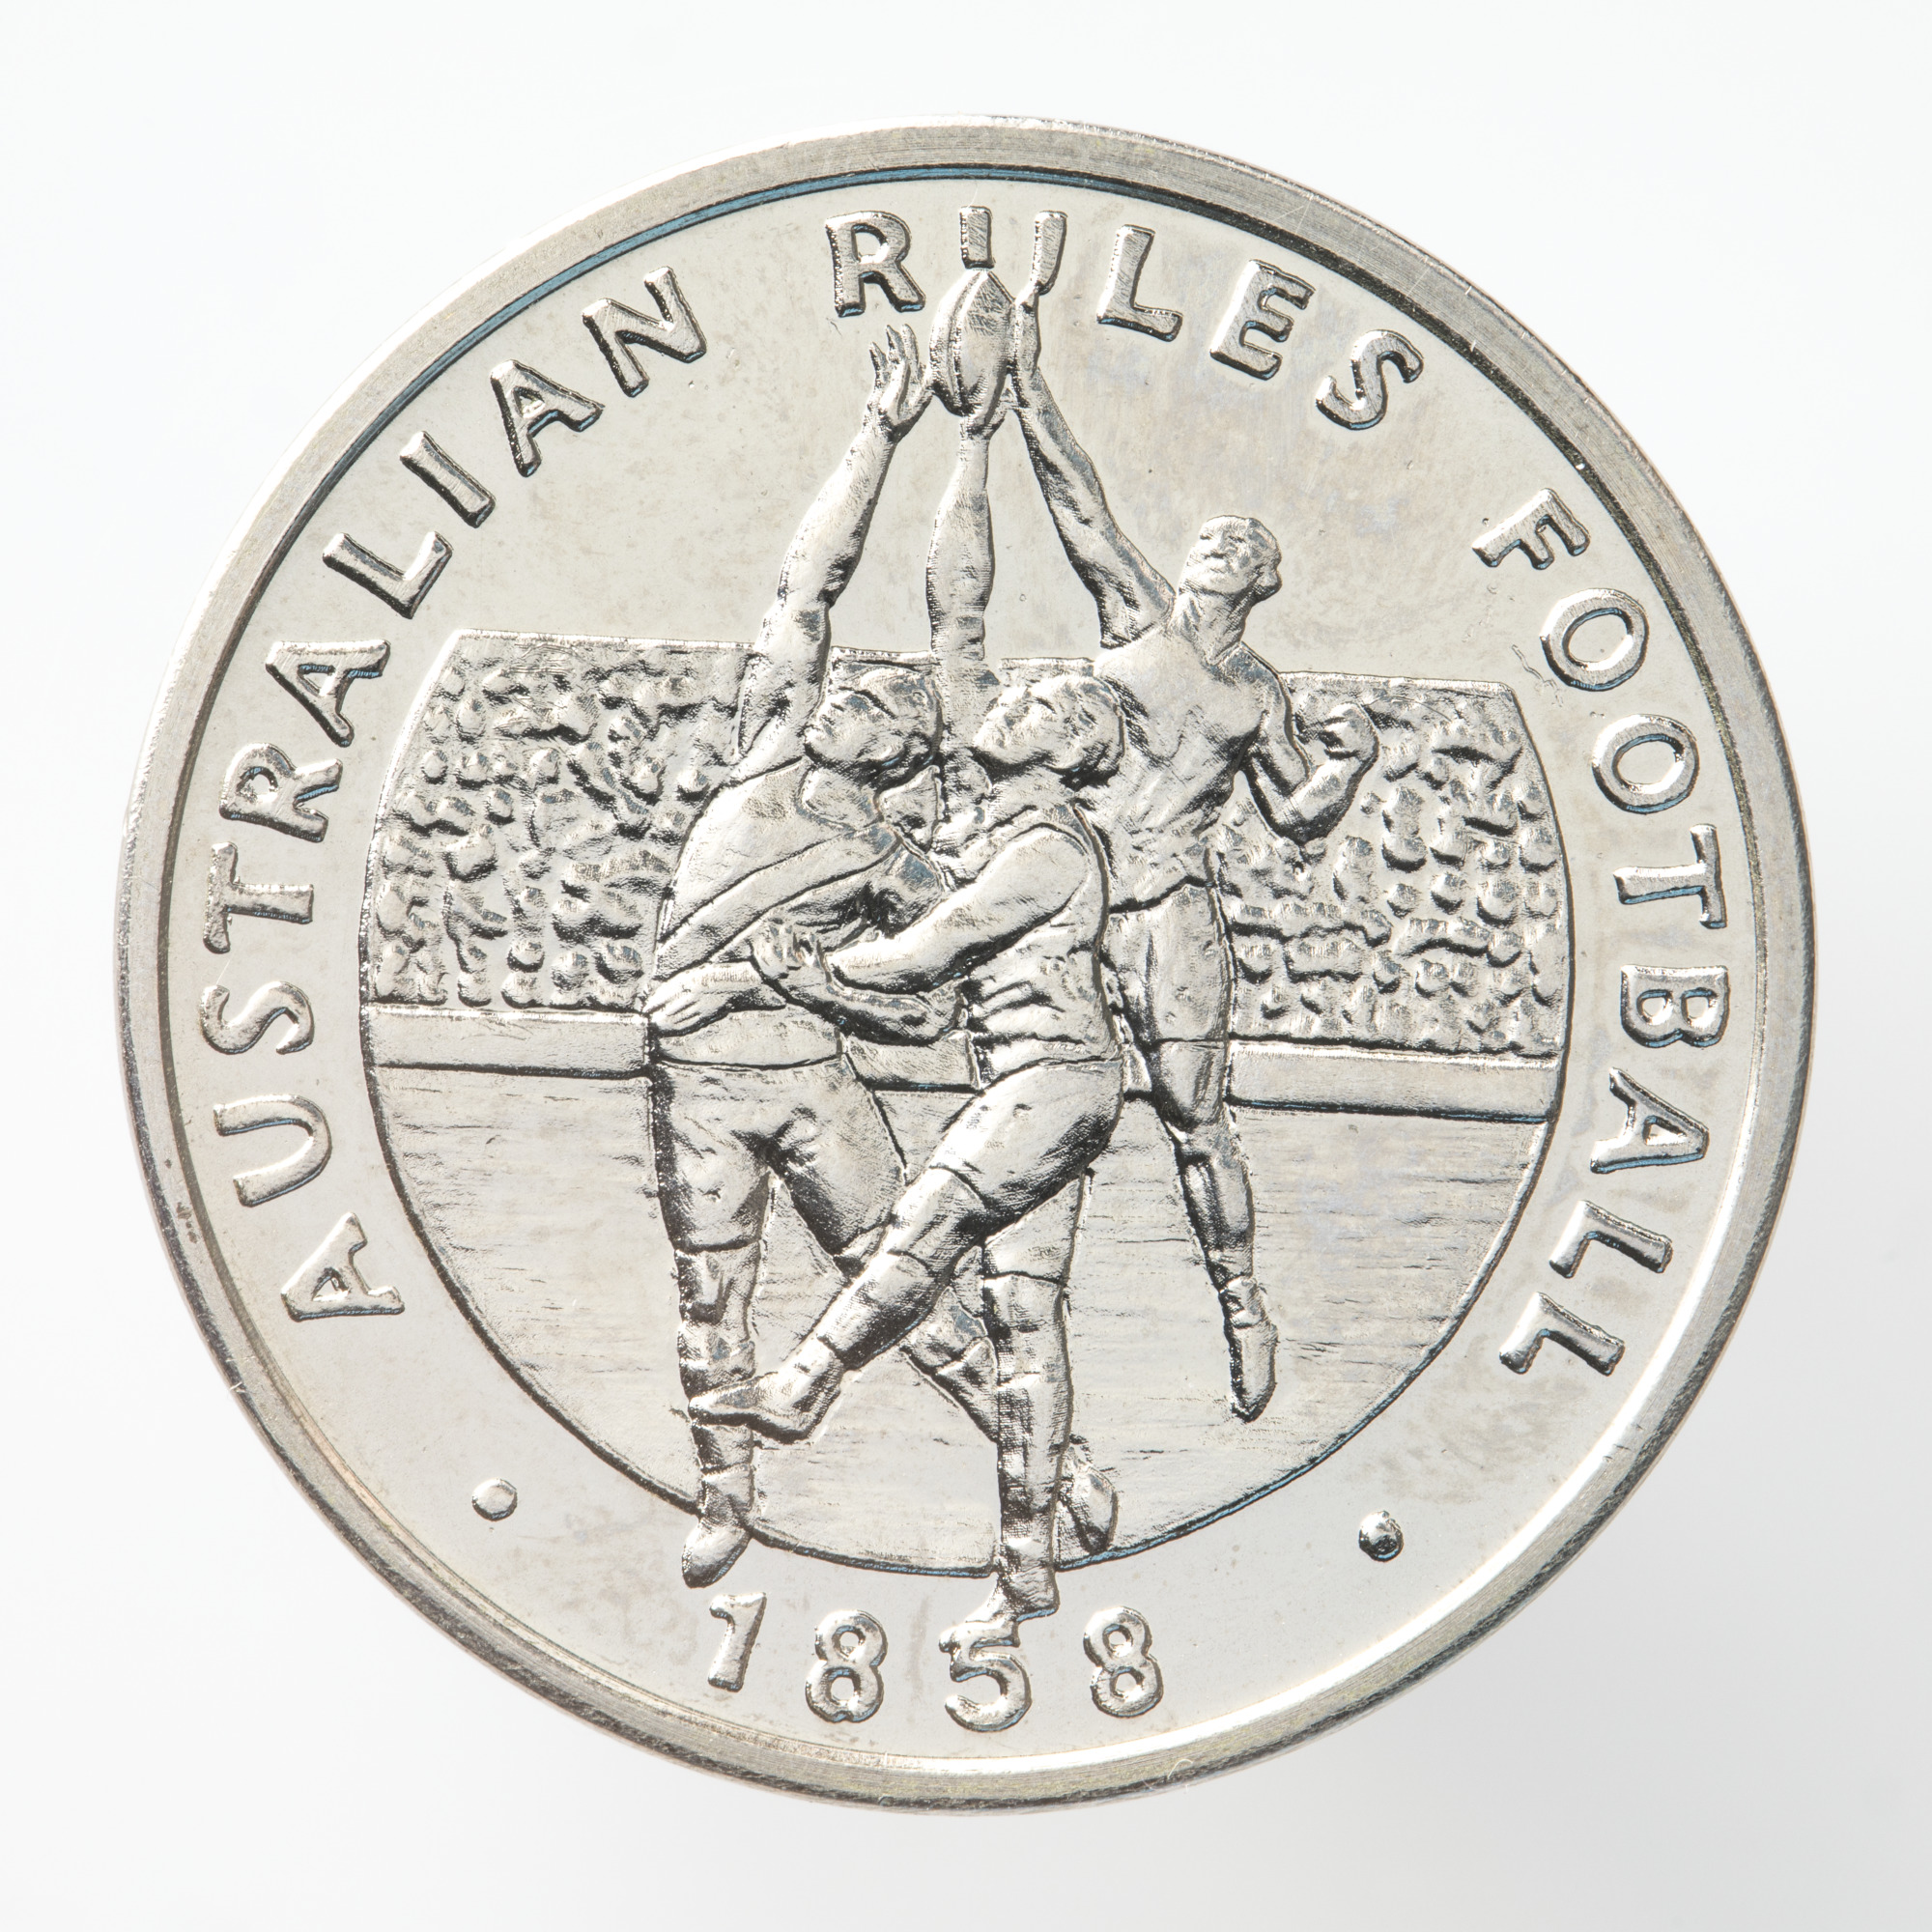 Australian bicentennial commemorative medal depicting Australian Rules Football
